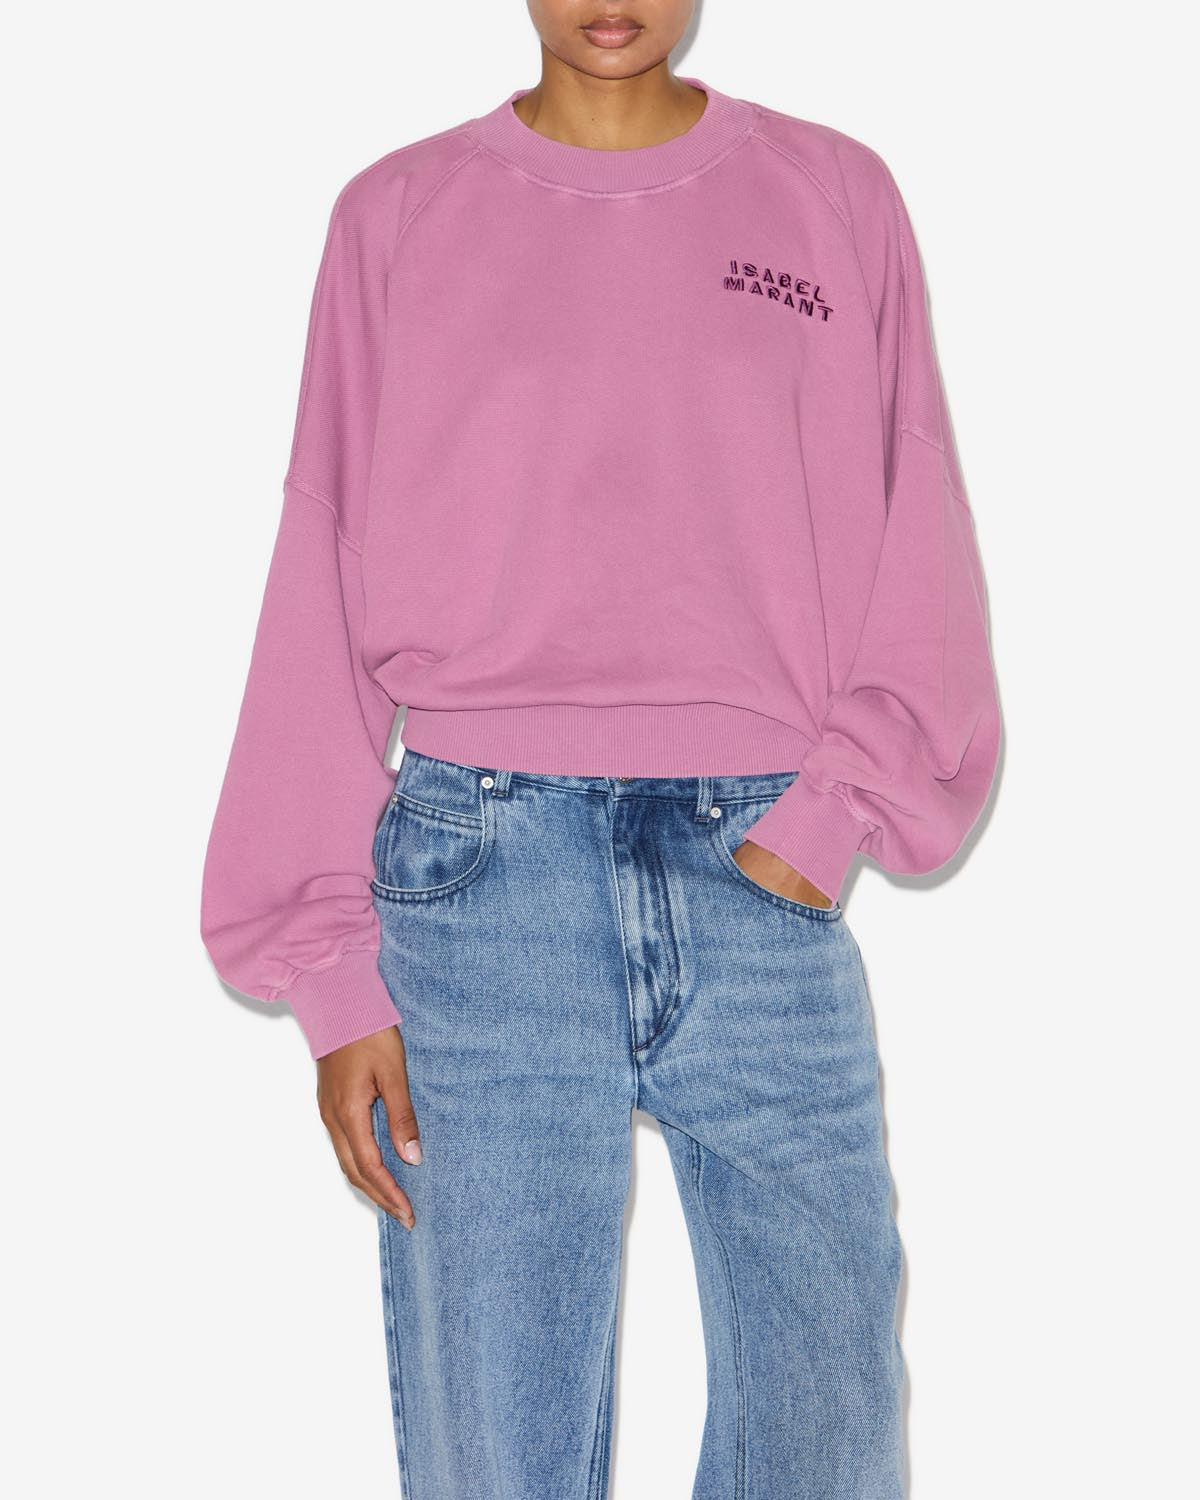 Shanice sweatshirt Woman Pink 5